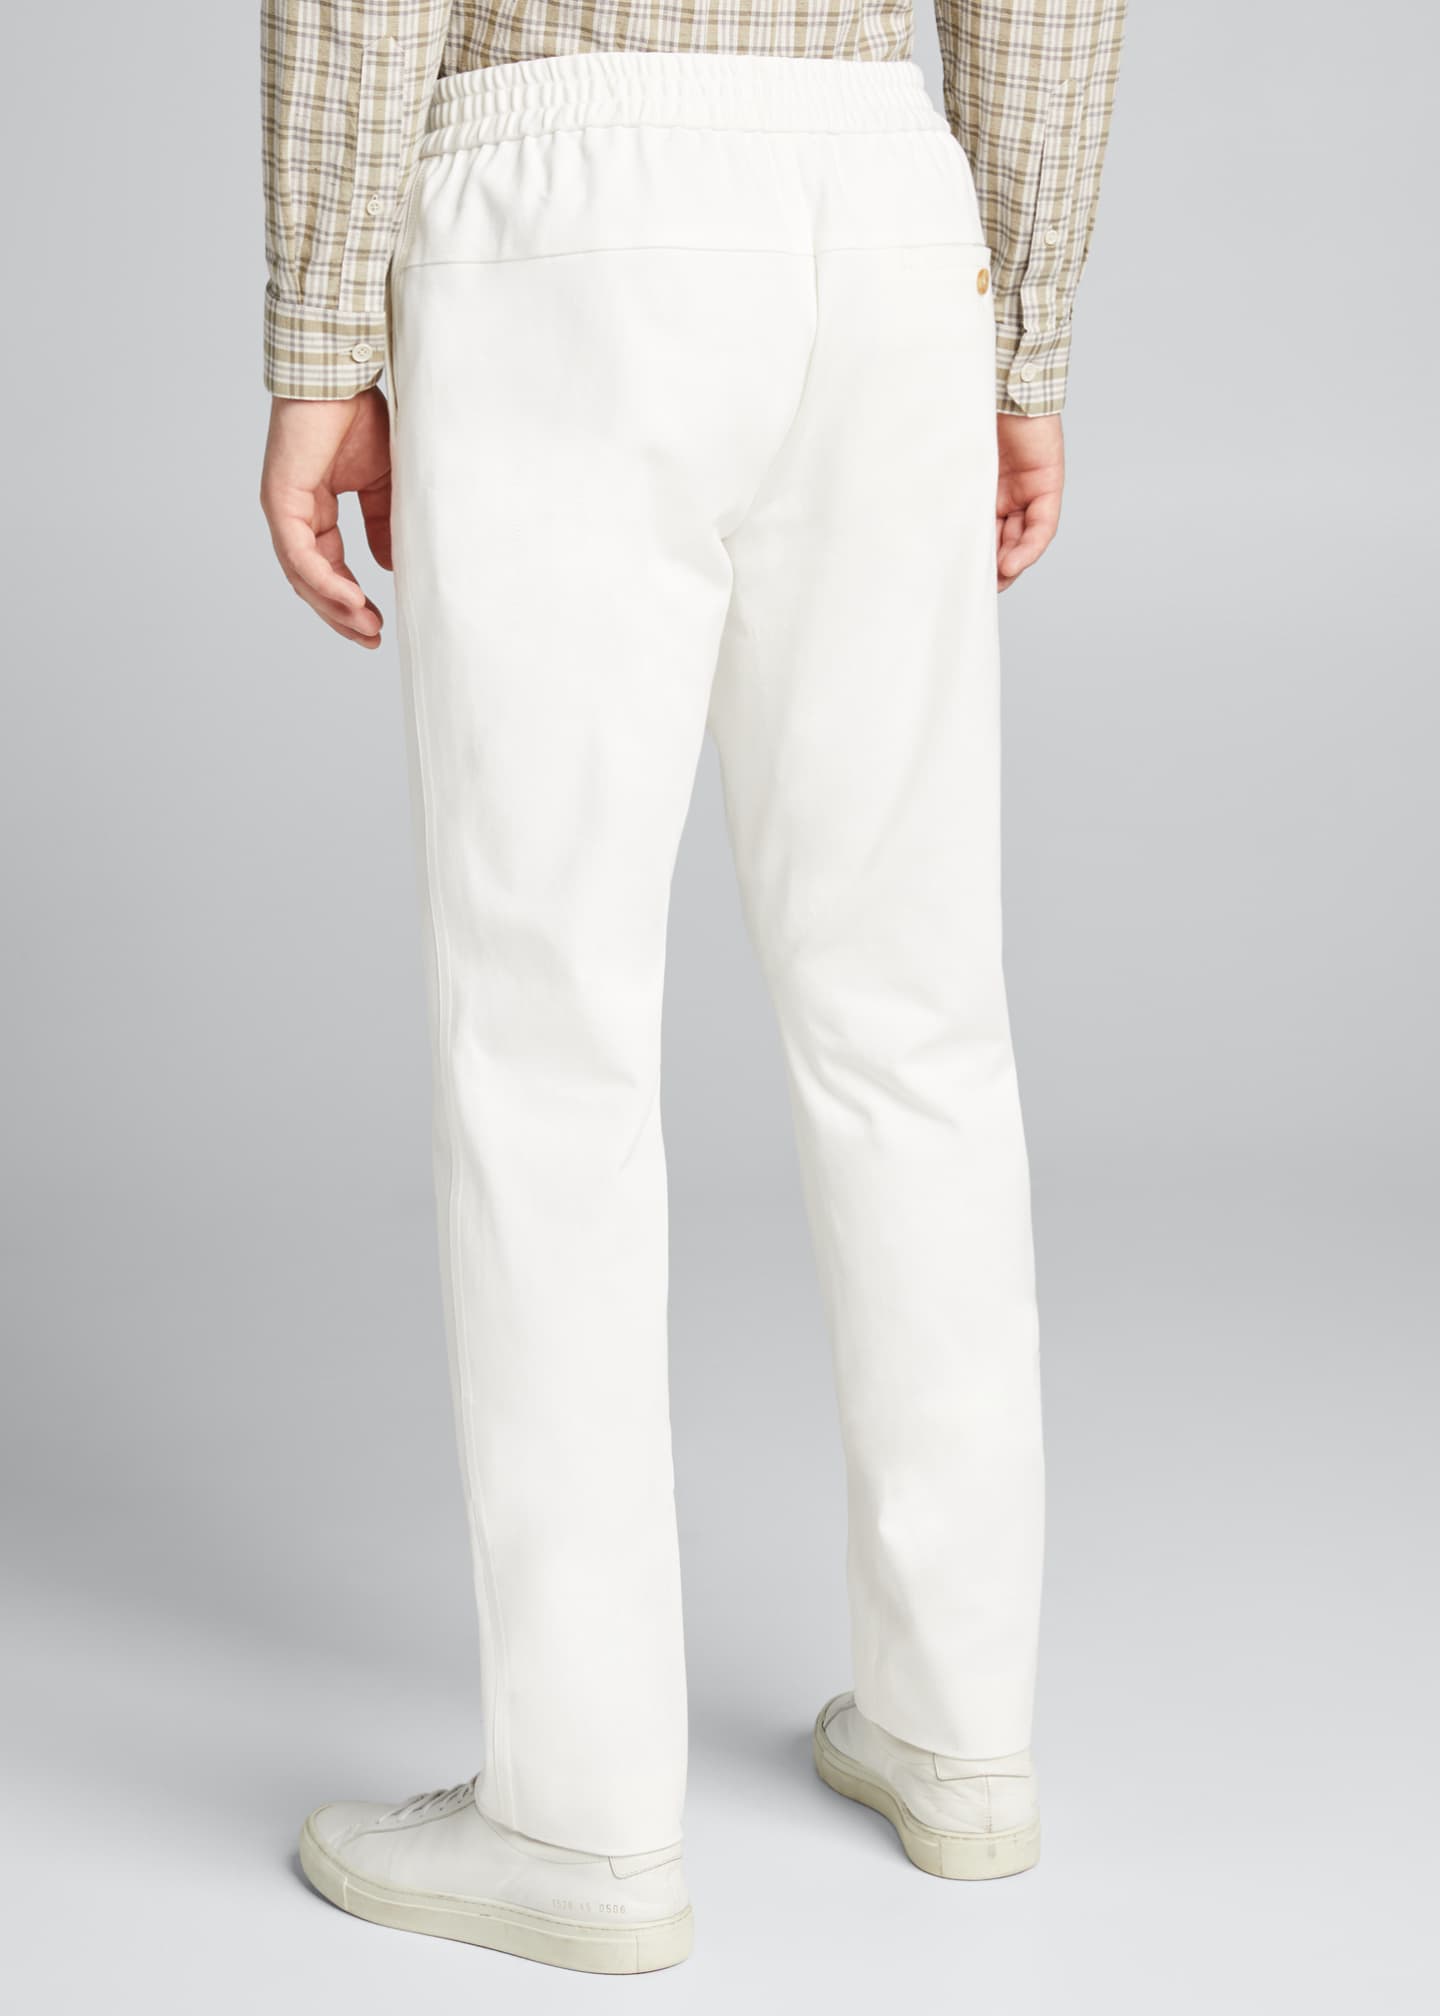 Vince Men's Cotton Twill Pull-On Pants - Bergdorf Goodman